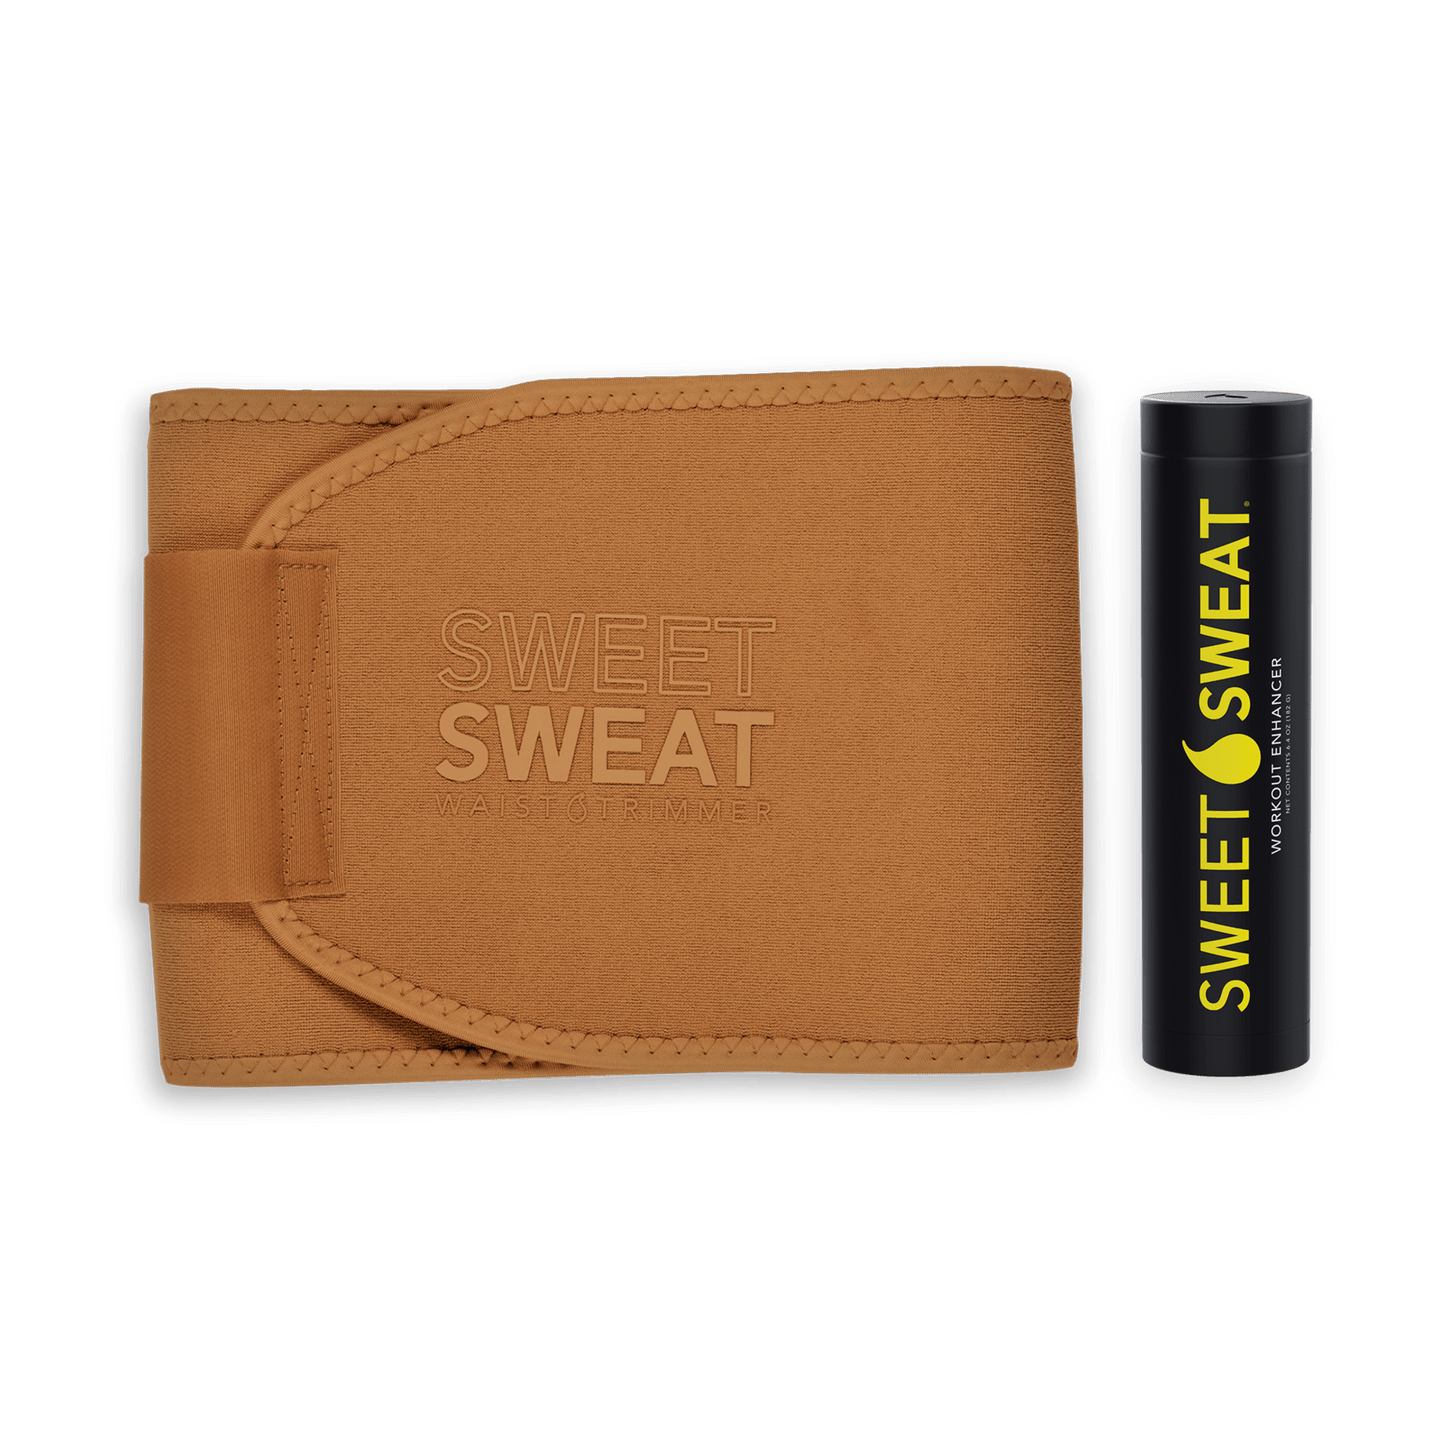 a Sweet Sweat tan wallet with the words Sweet Sweat on it.